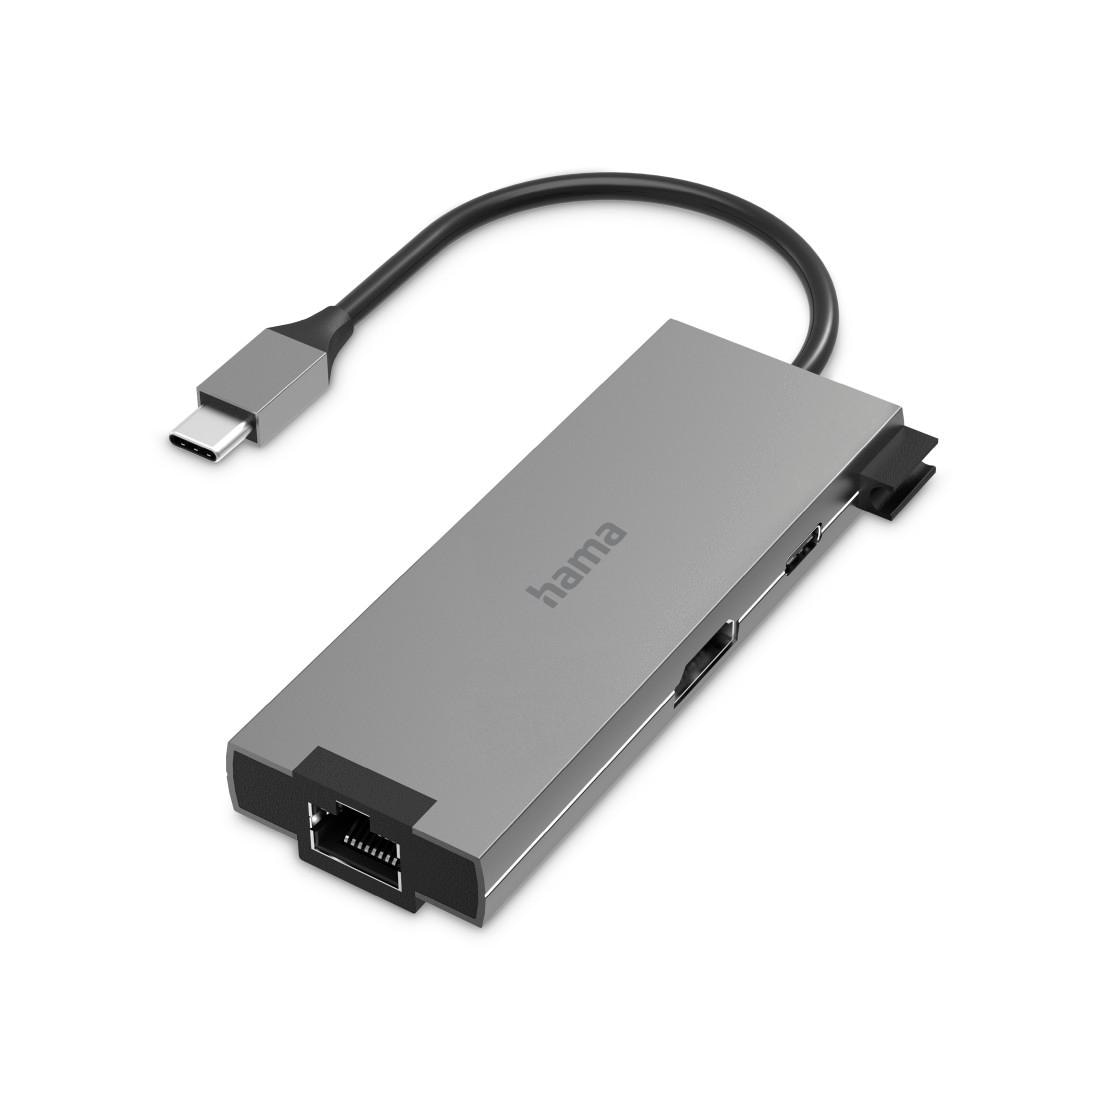 Hama USB-Adapter »USB-C Multiport Hub für Laptop mit 5 Ports, USB-A, USB-C, HDMI, LAN«, USB-C zu USB Typ C-USB Typ A-HDMI-RJ-45 (Ethernet), 15 cm, Laptop Dockingstation, kompakt, robustes Gehäuse, silberfarben